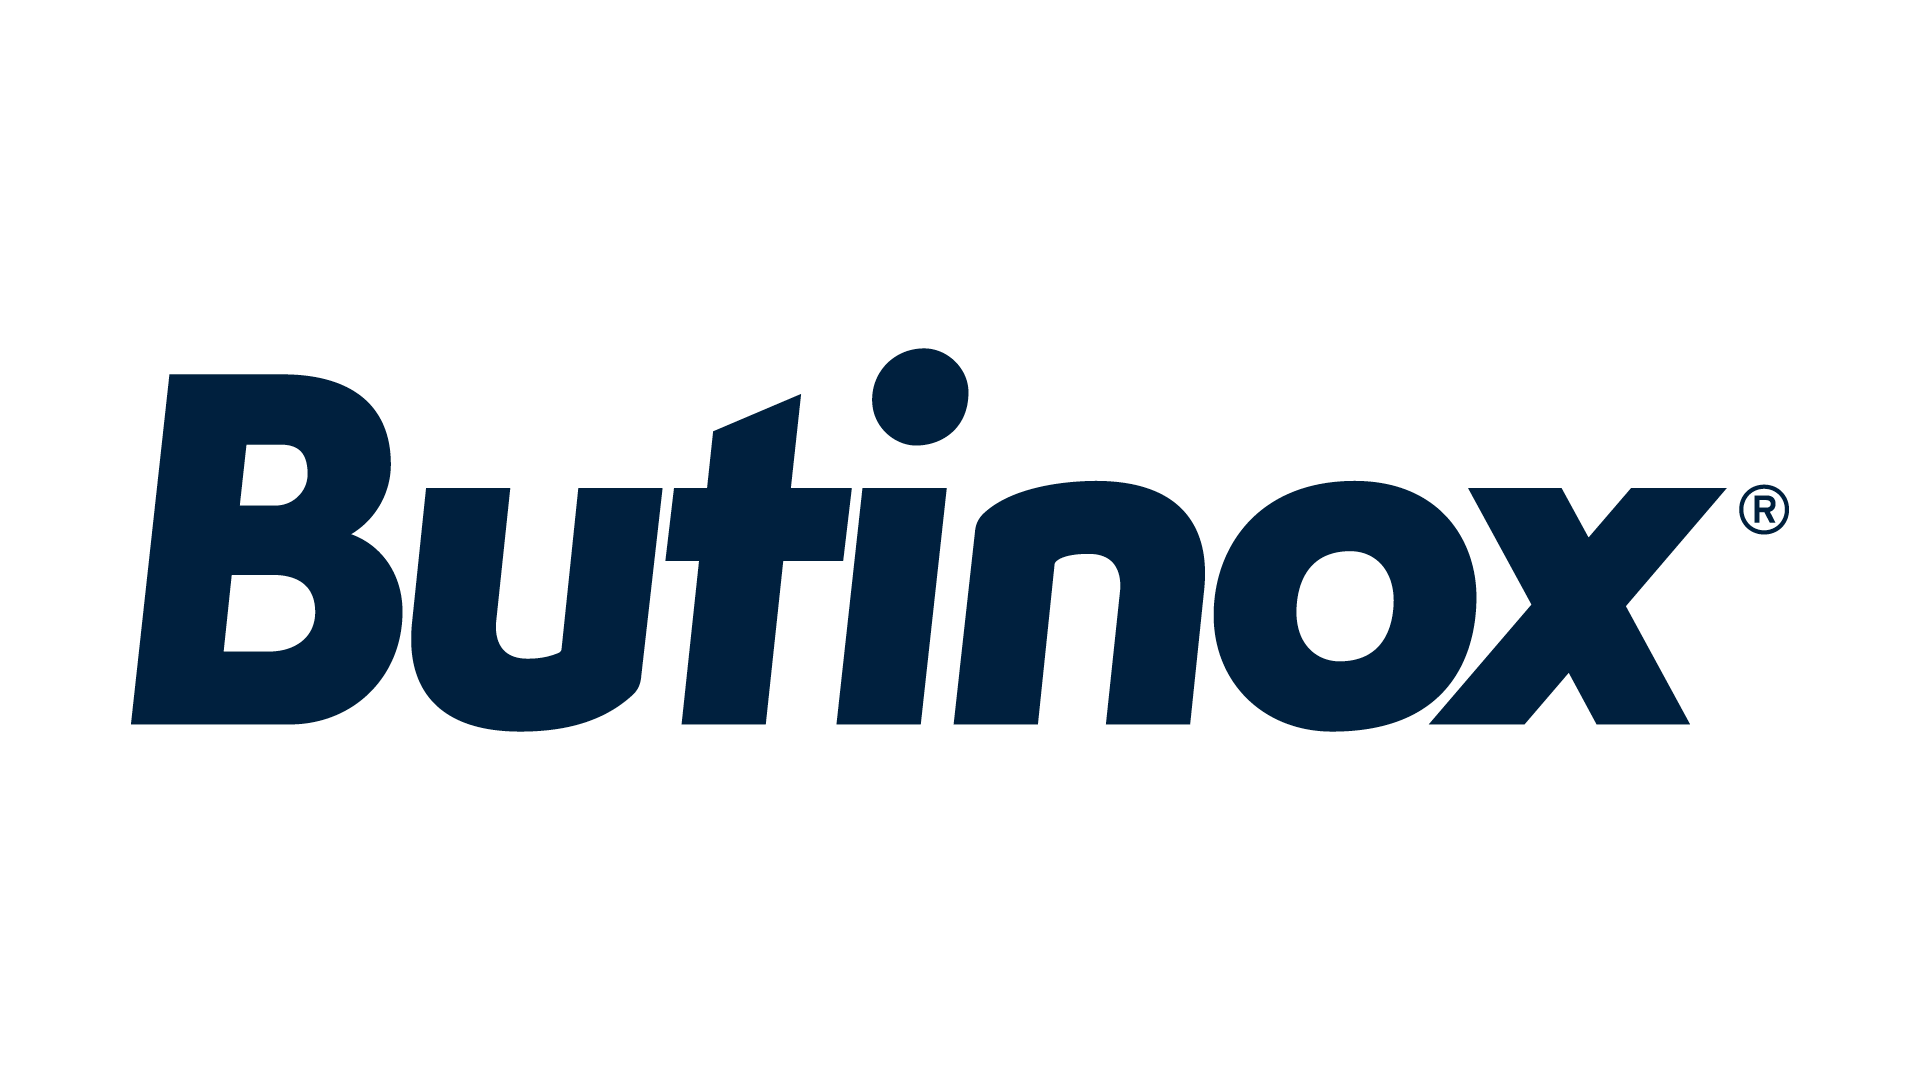 Butinox logo